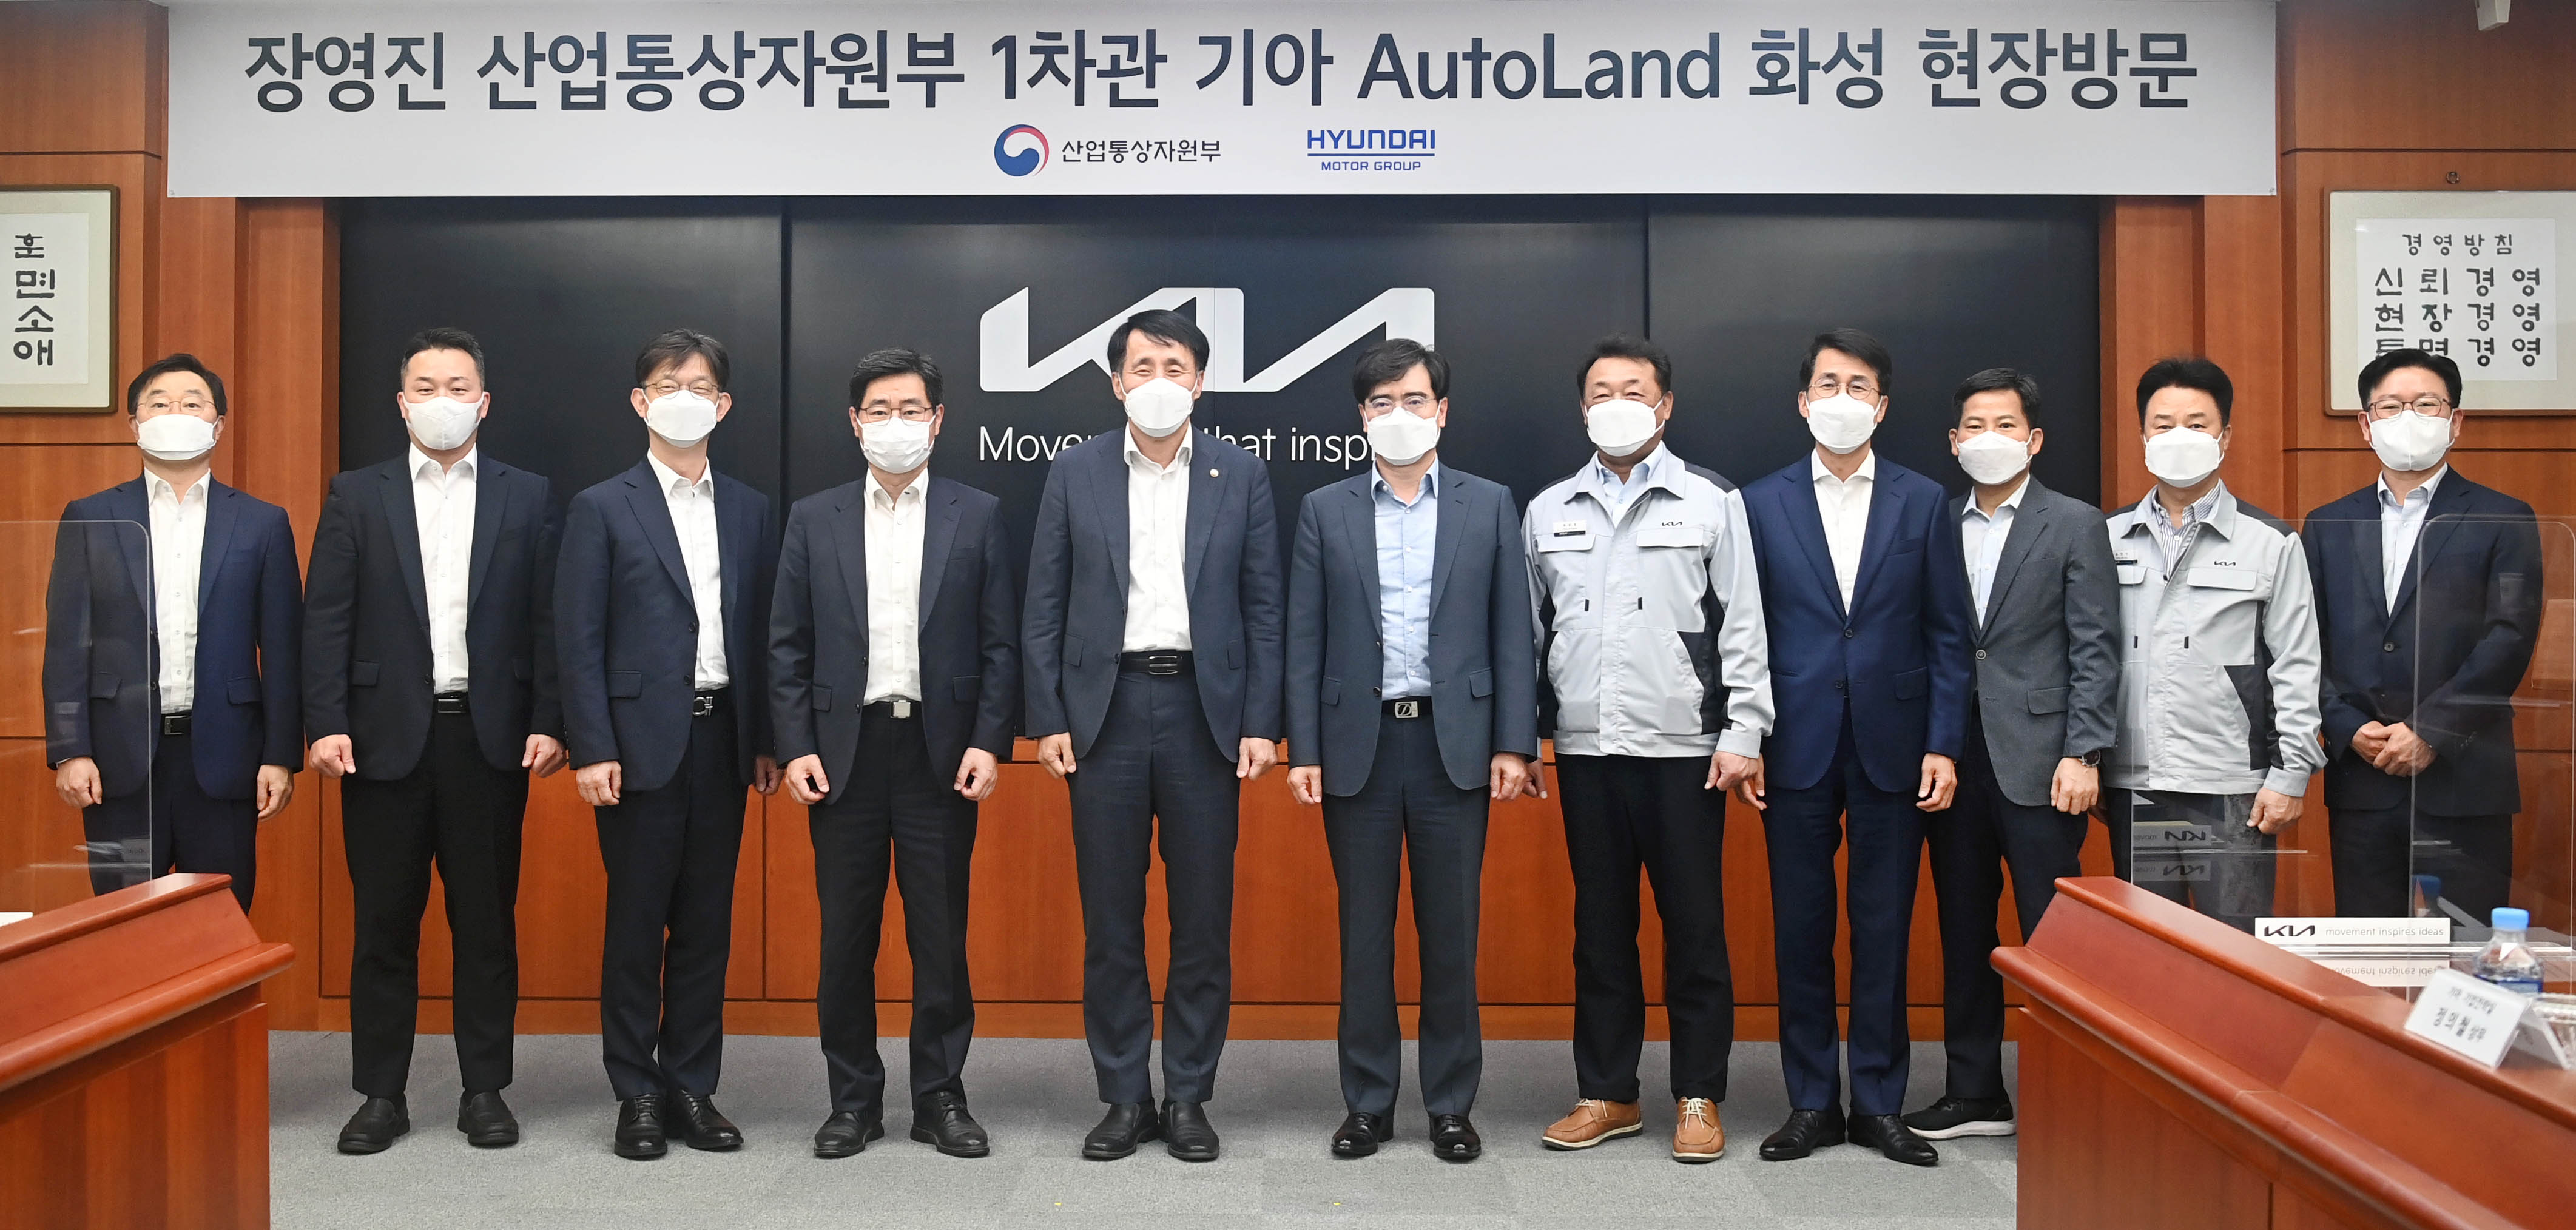 Vice Minister visits Hyundai-Kia Motors AutoLand plant